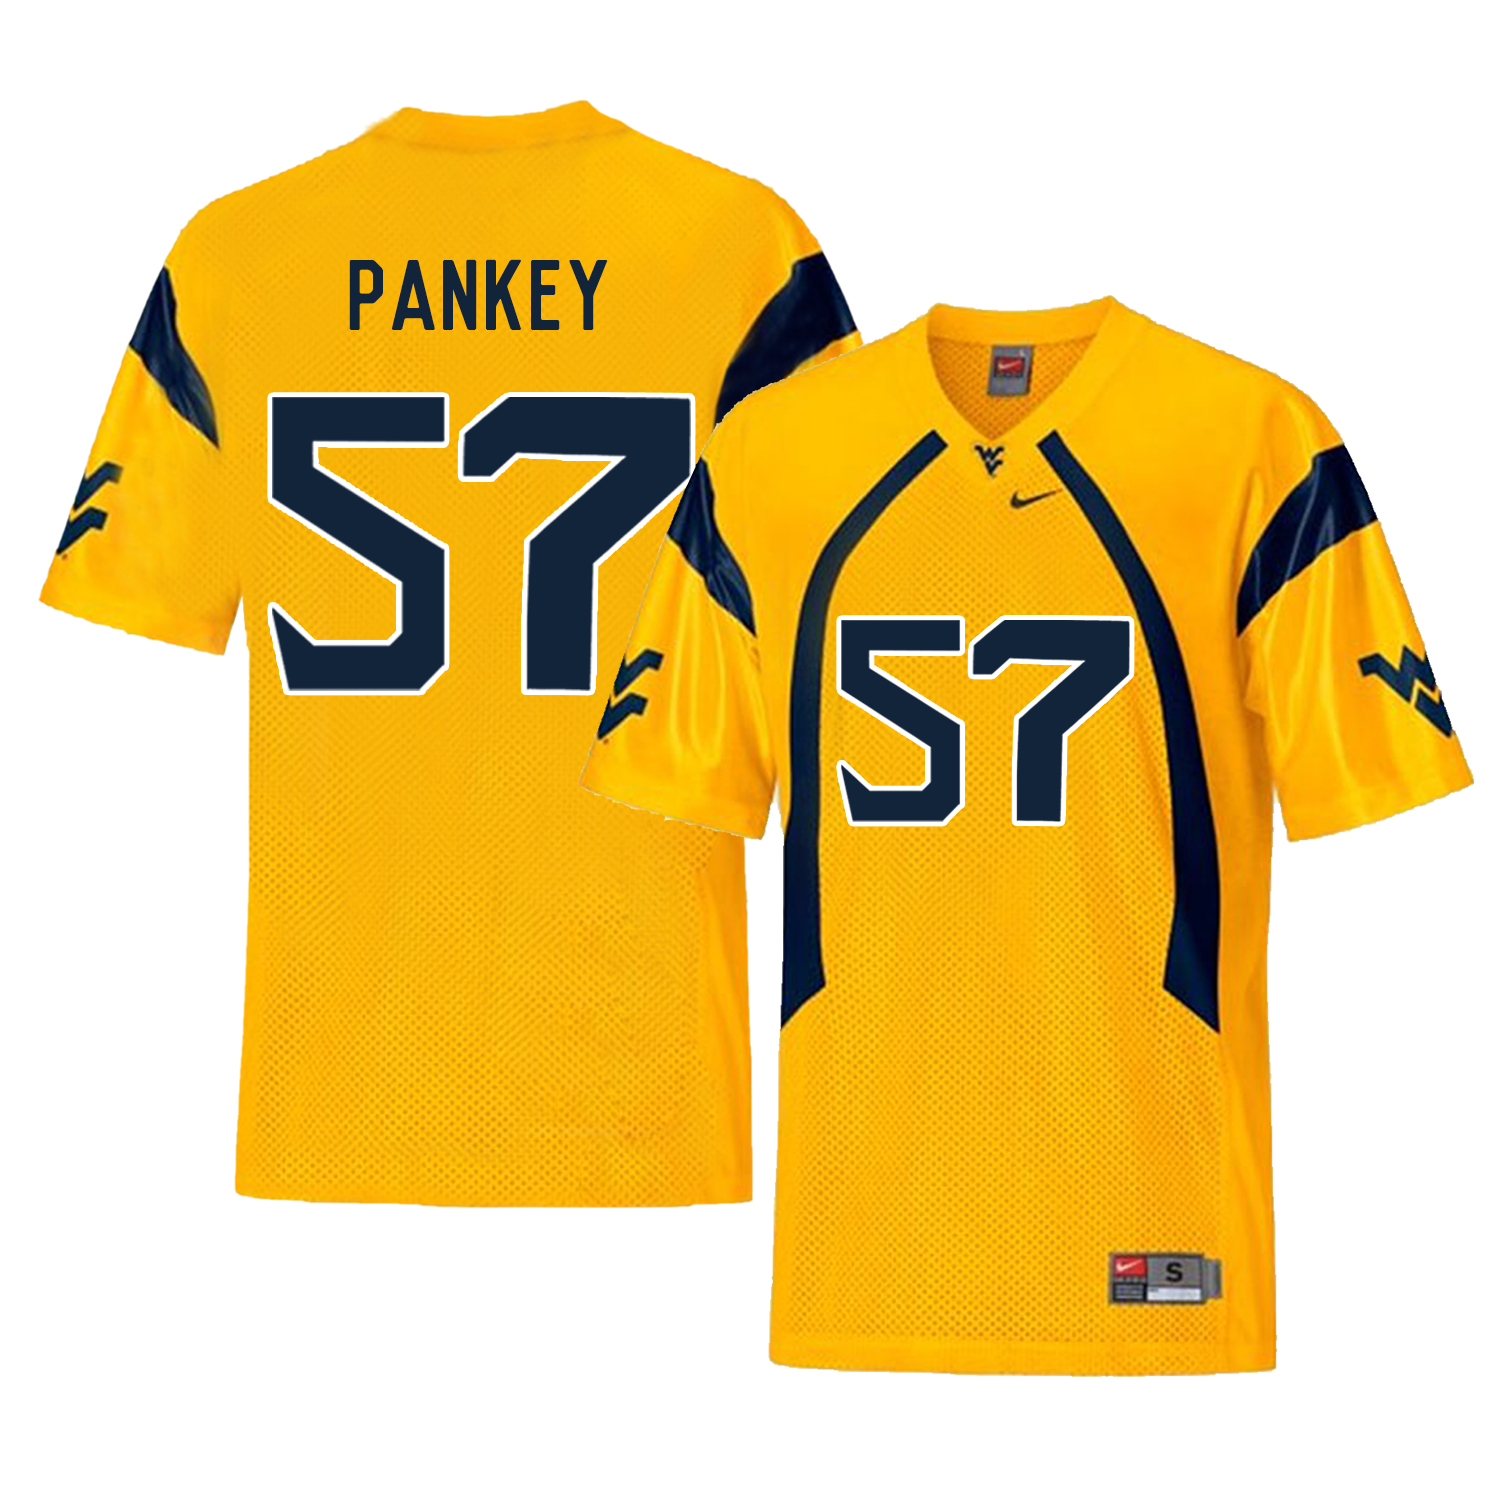 West Virginia Mountaineers 57 Adam Pankey Gold College Football Jersey